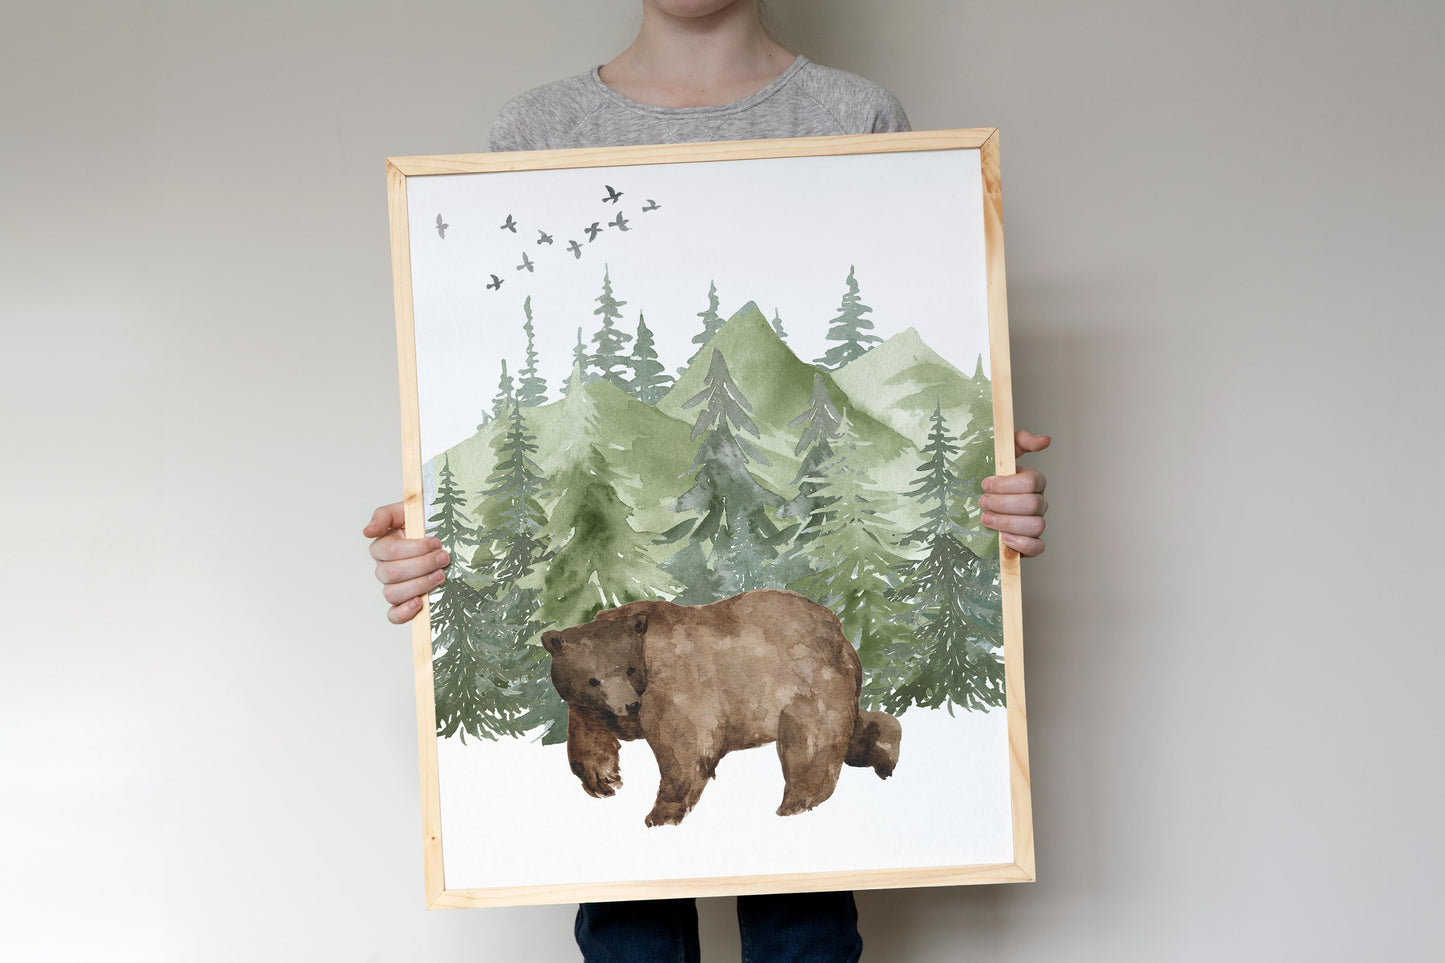 Forest Printable Wall Art, Woodland Nursery Prints Set of 3 - Enchanted Green